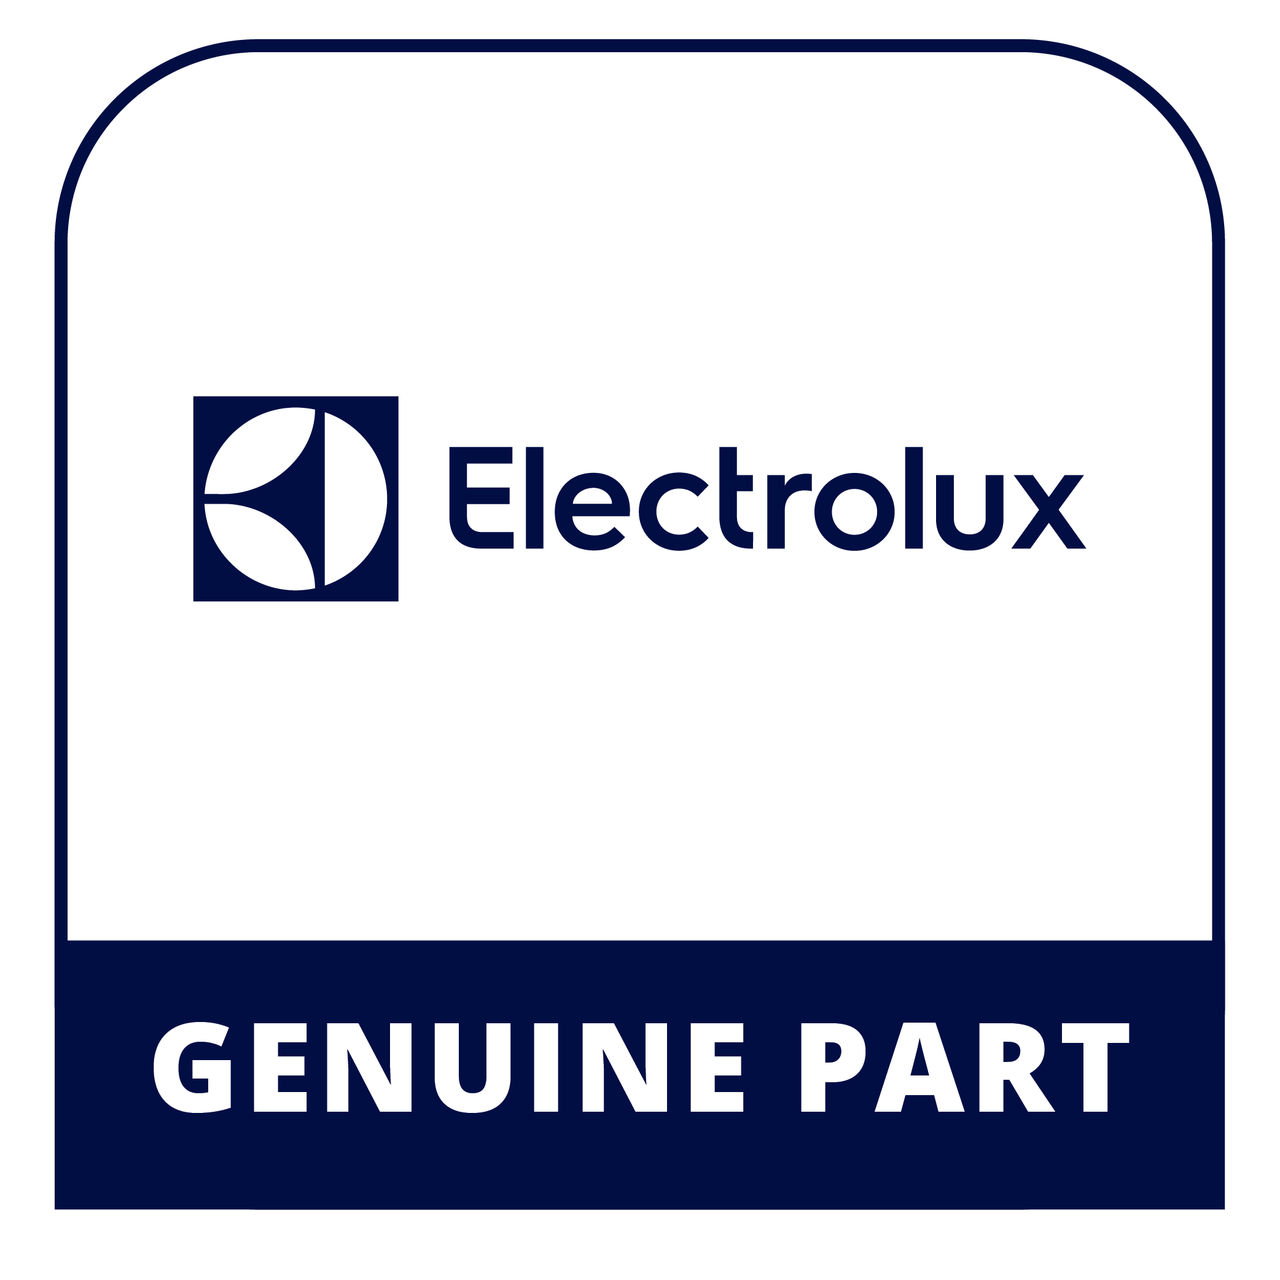 Frigidaire - Electrolux 5304523604 Connector Piece - Genuine Electrolux Part